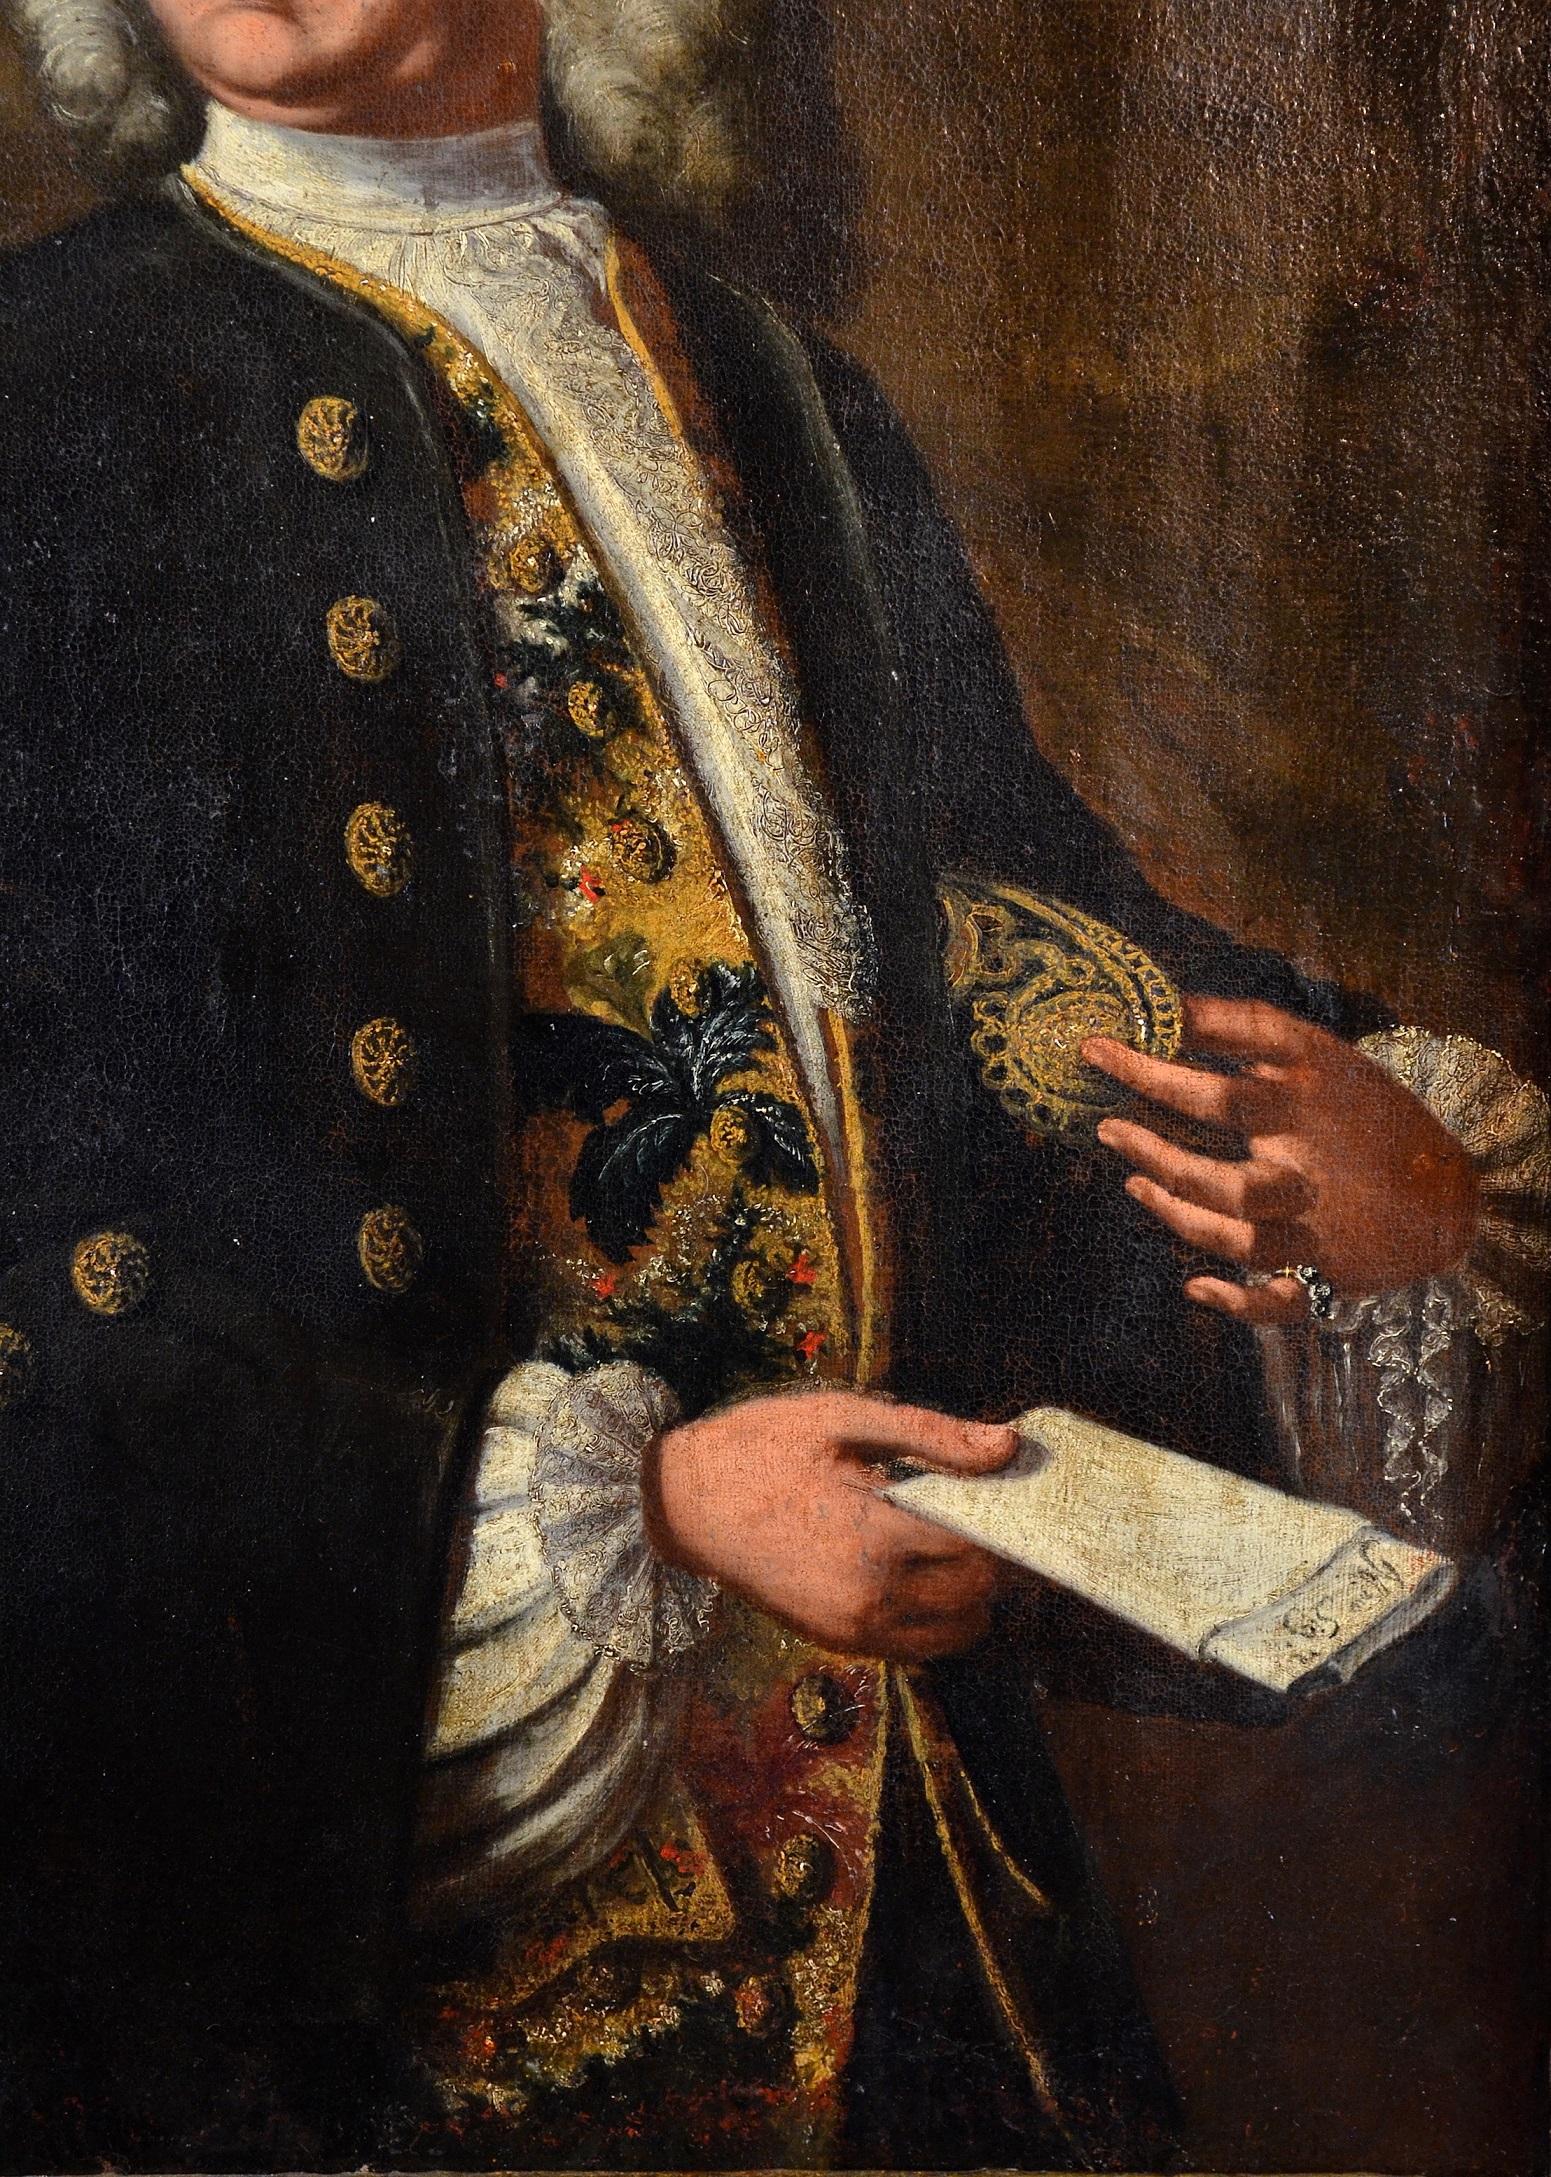 Venetian Gentleman Portrait Paint Oil on canvas 18th Century Italy Baroque Art - Old Masters Painting by Bartolomeo Nazari (Bergamo 1693 - Milan 1758), attributed to